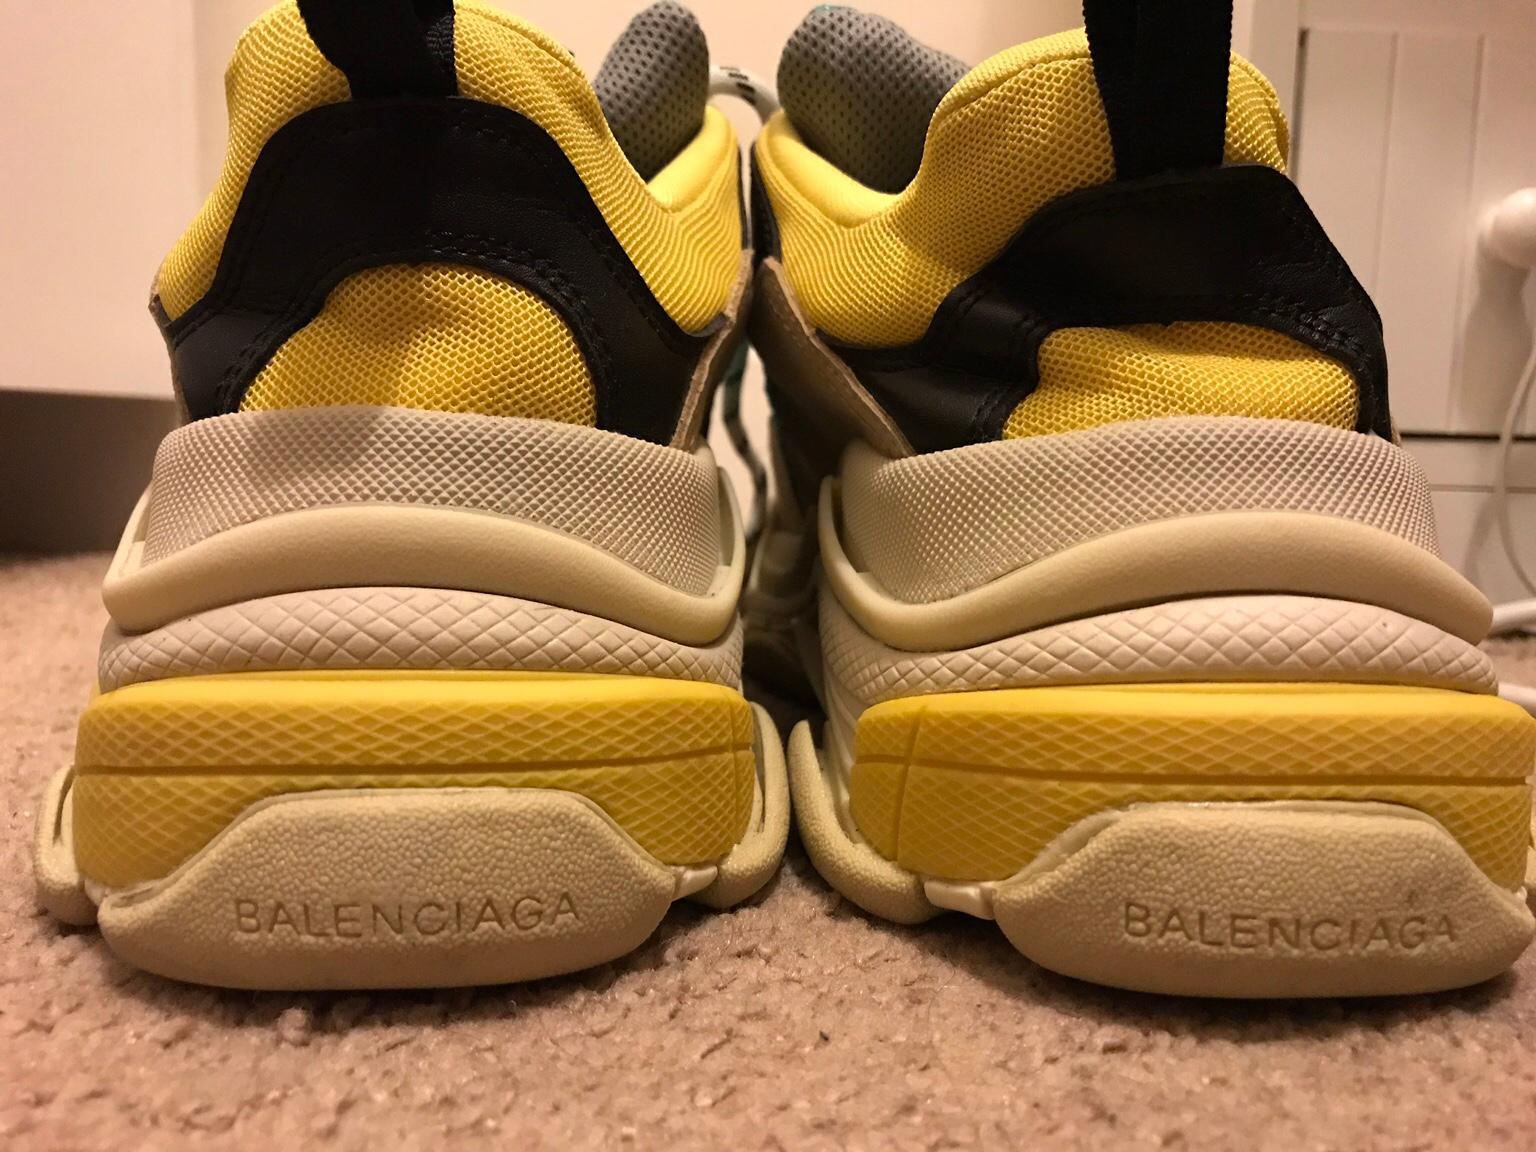 The Sneakers Triple S black yellow Balenciaga worn by